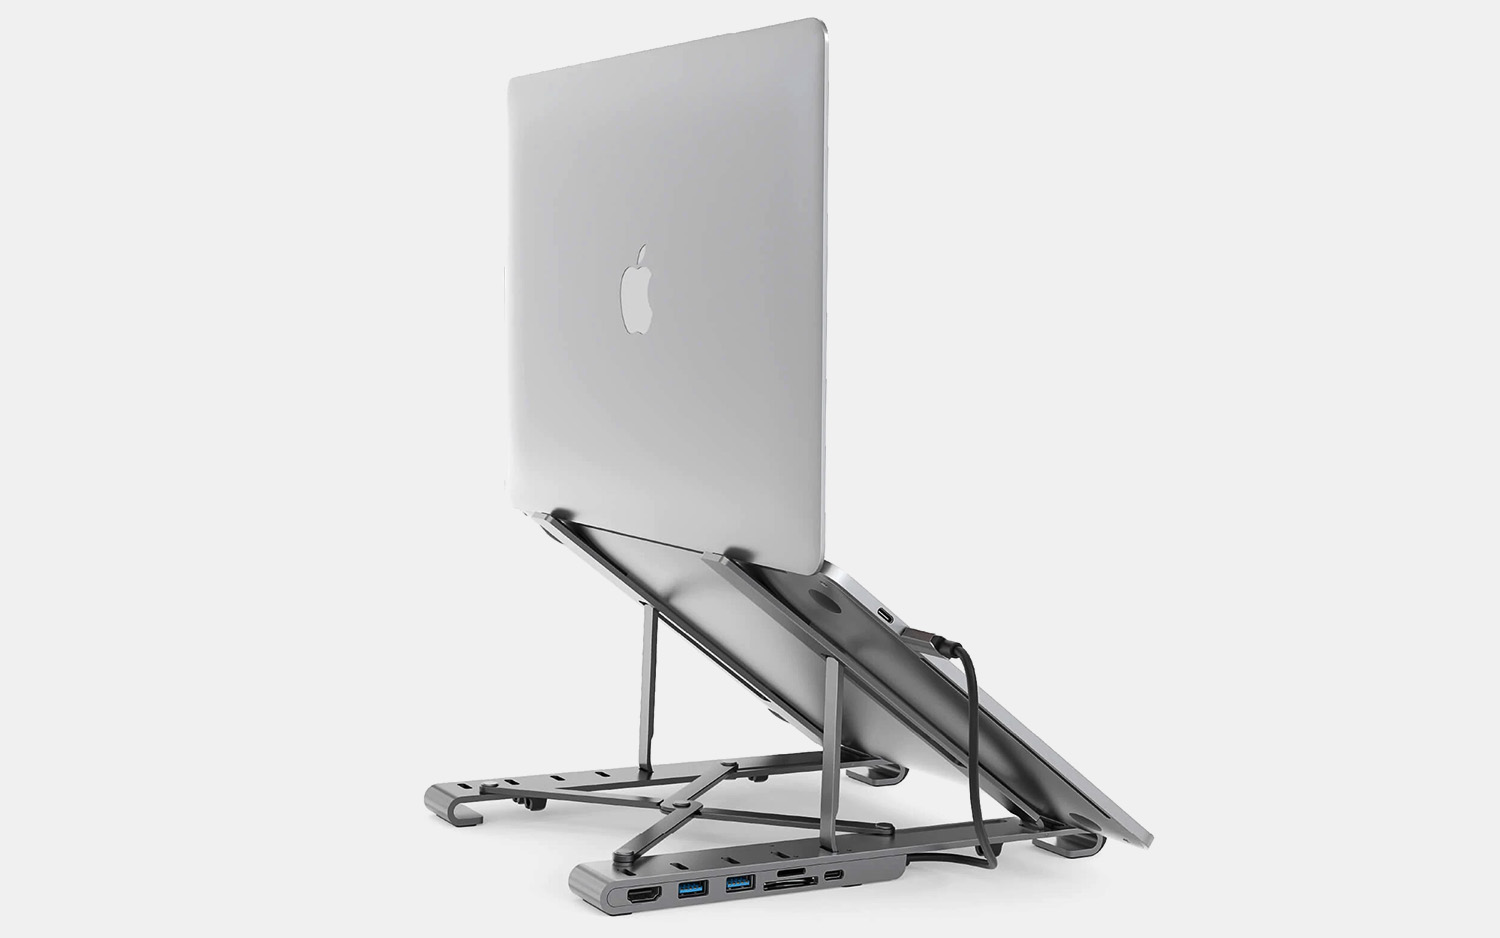 HyperDrive USB Hub Laptop Stand